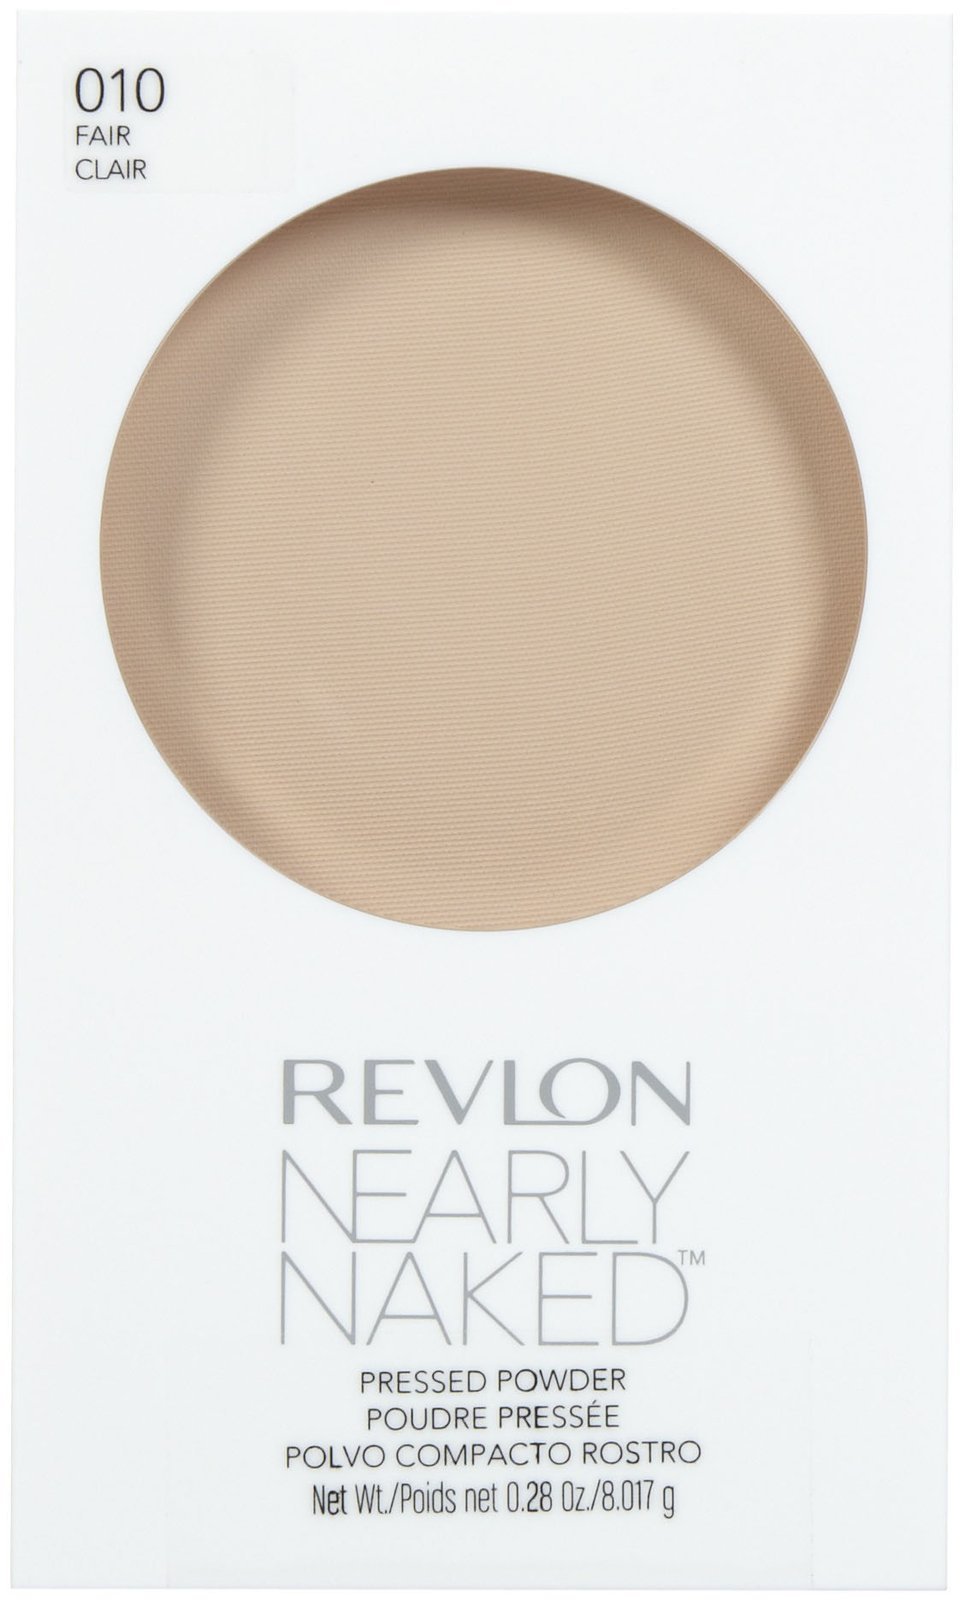 Revlon Nearly Naked Pressed Powder - Fair - 0.28 oz